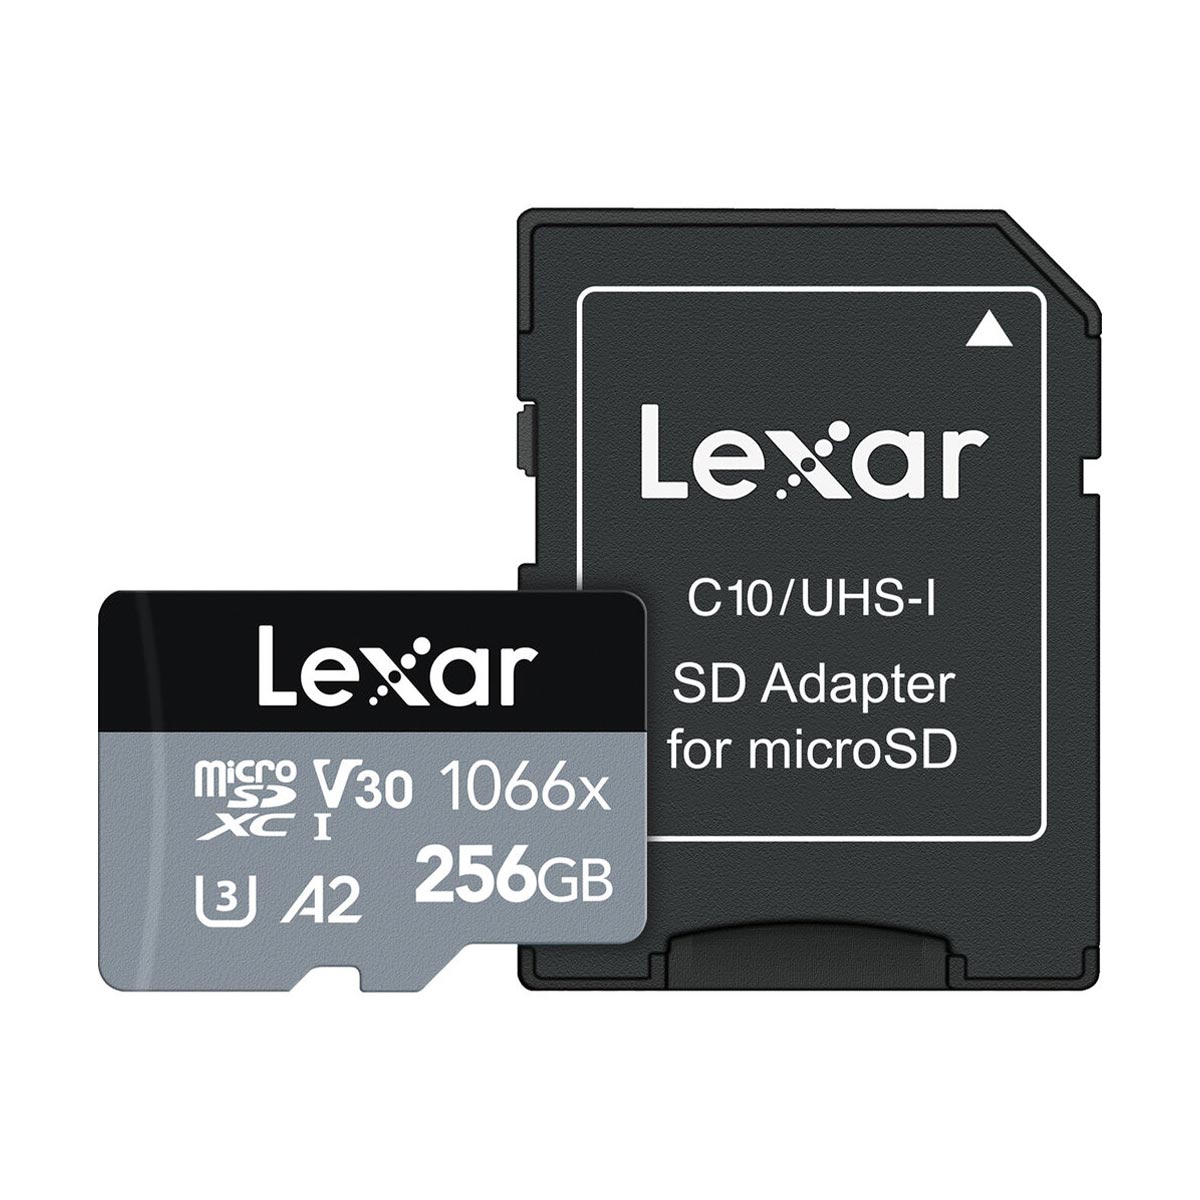 Lexar 256GB Professional 1066x UHS-I microSDXC (V30) Memory Card with SD Adapter